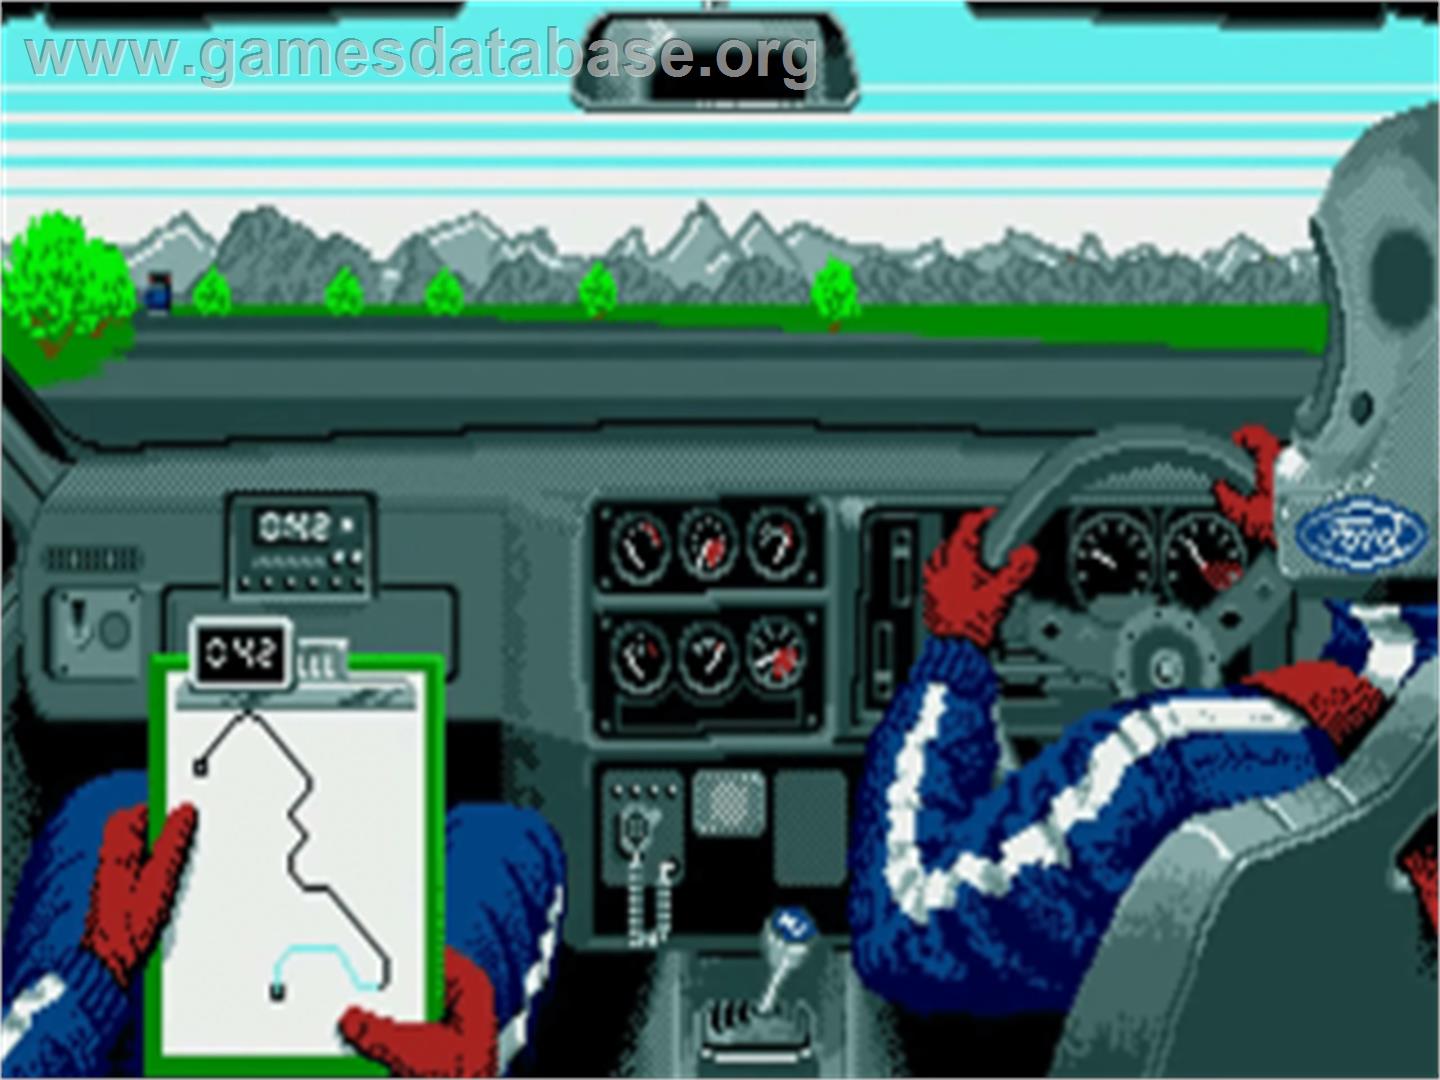 Lombard RAC Rally - Commodore Amiga - Artwork - In Game